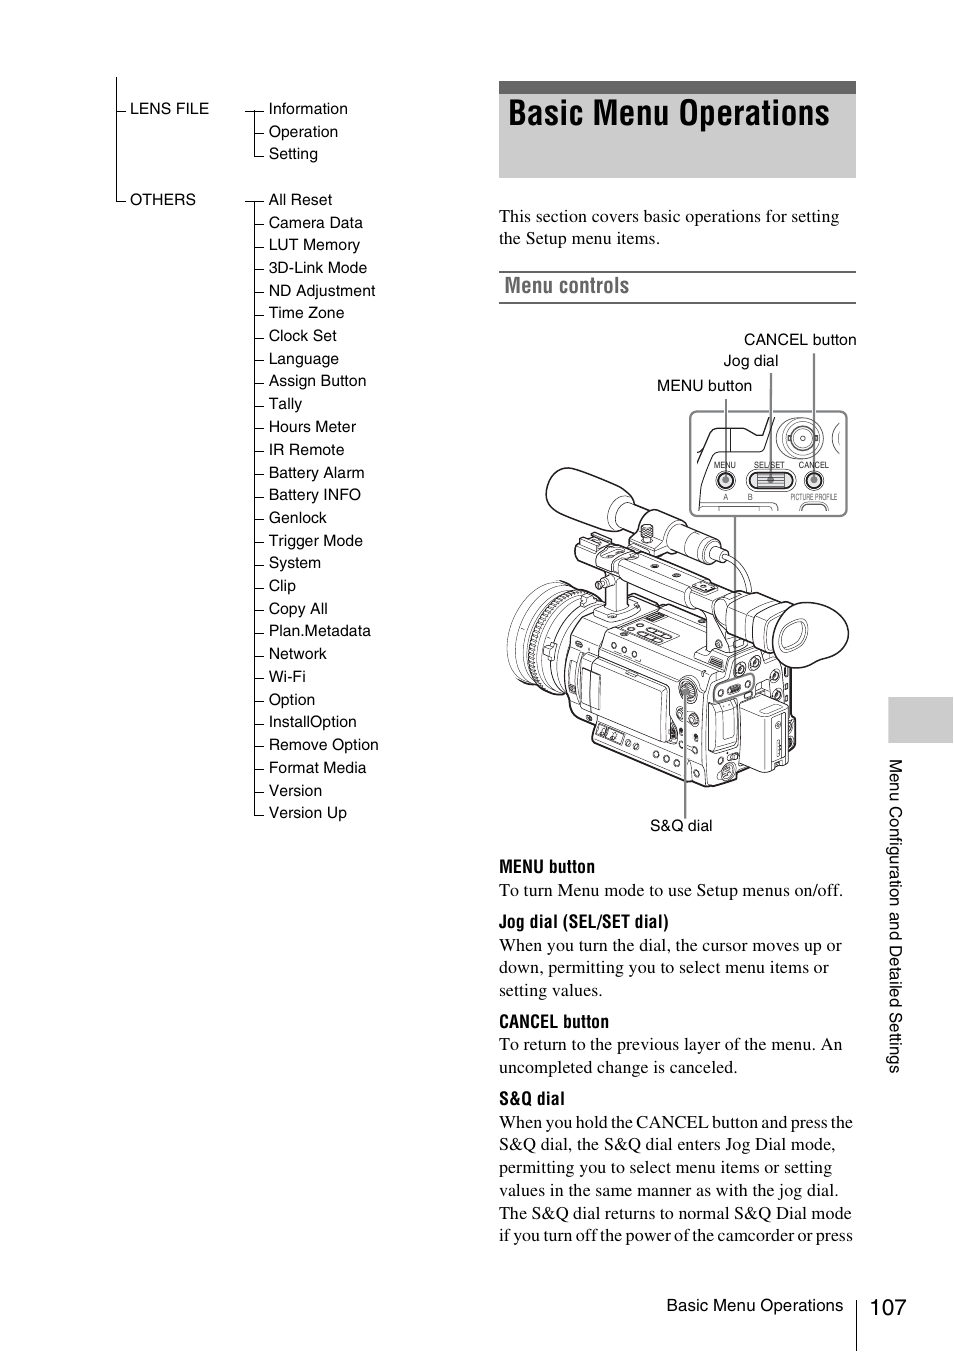 Basic menu operations, Menu controls | Sony PMW-F3K User Manual | Page 107 / 164